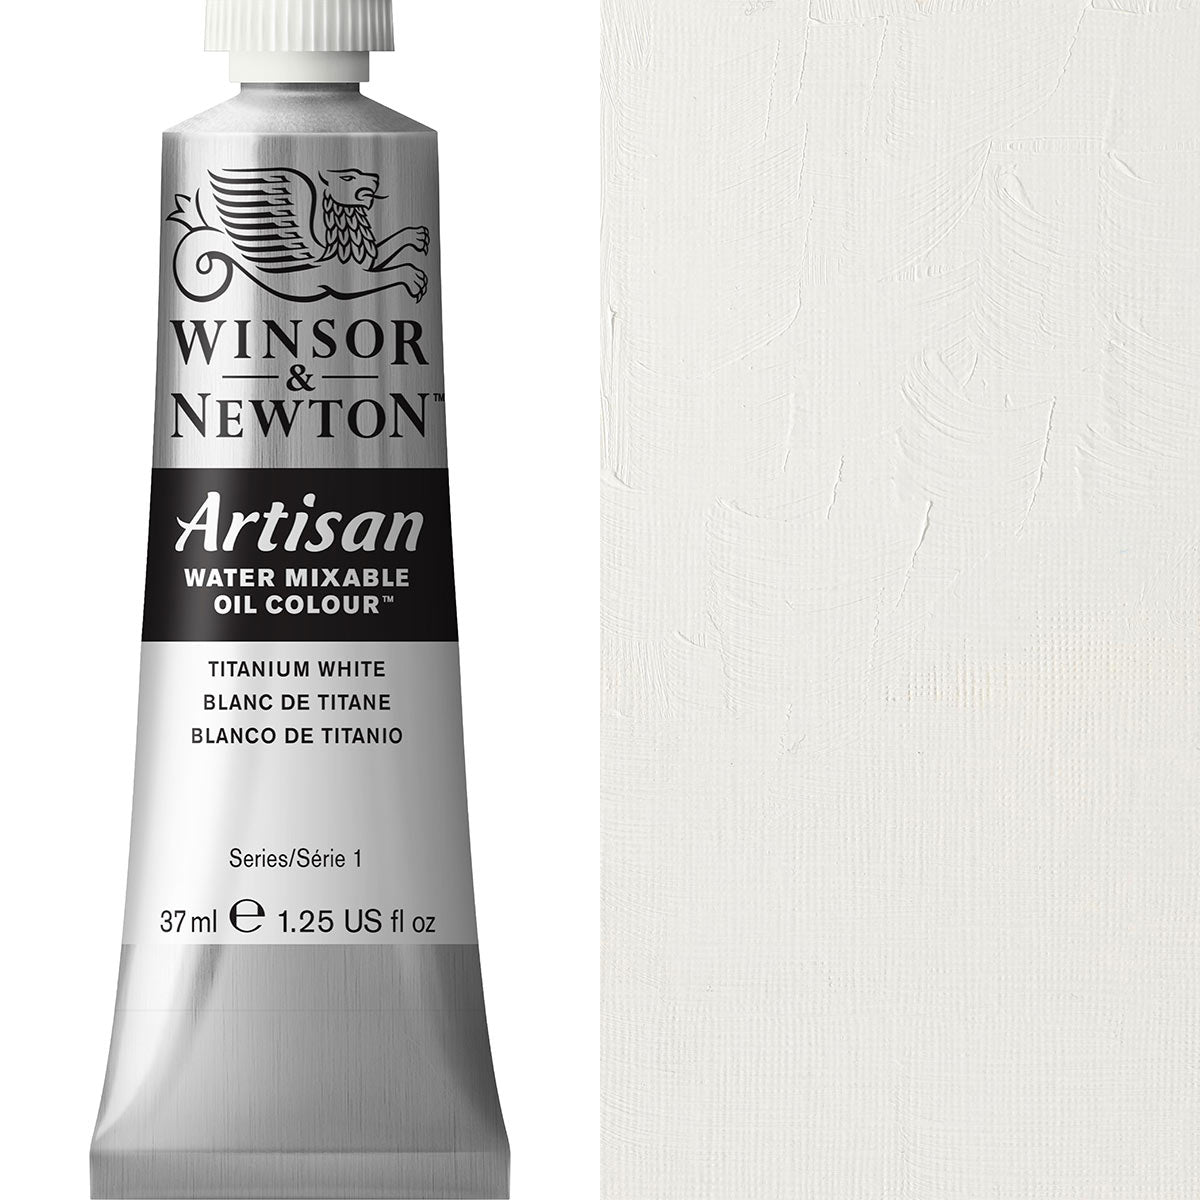 Winsor et Newton - Couleur d'huile artisanale Natermable - 37 ml - Titane blanc